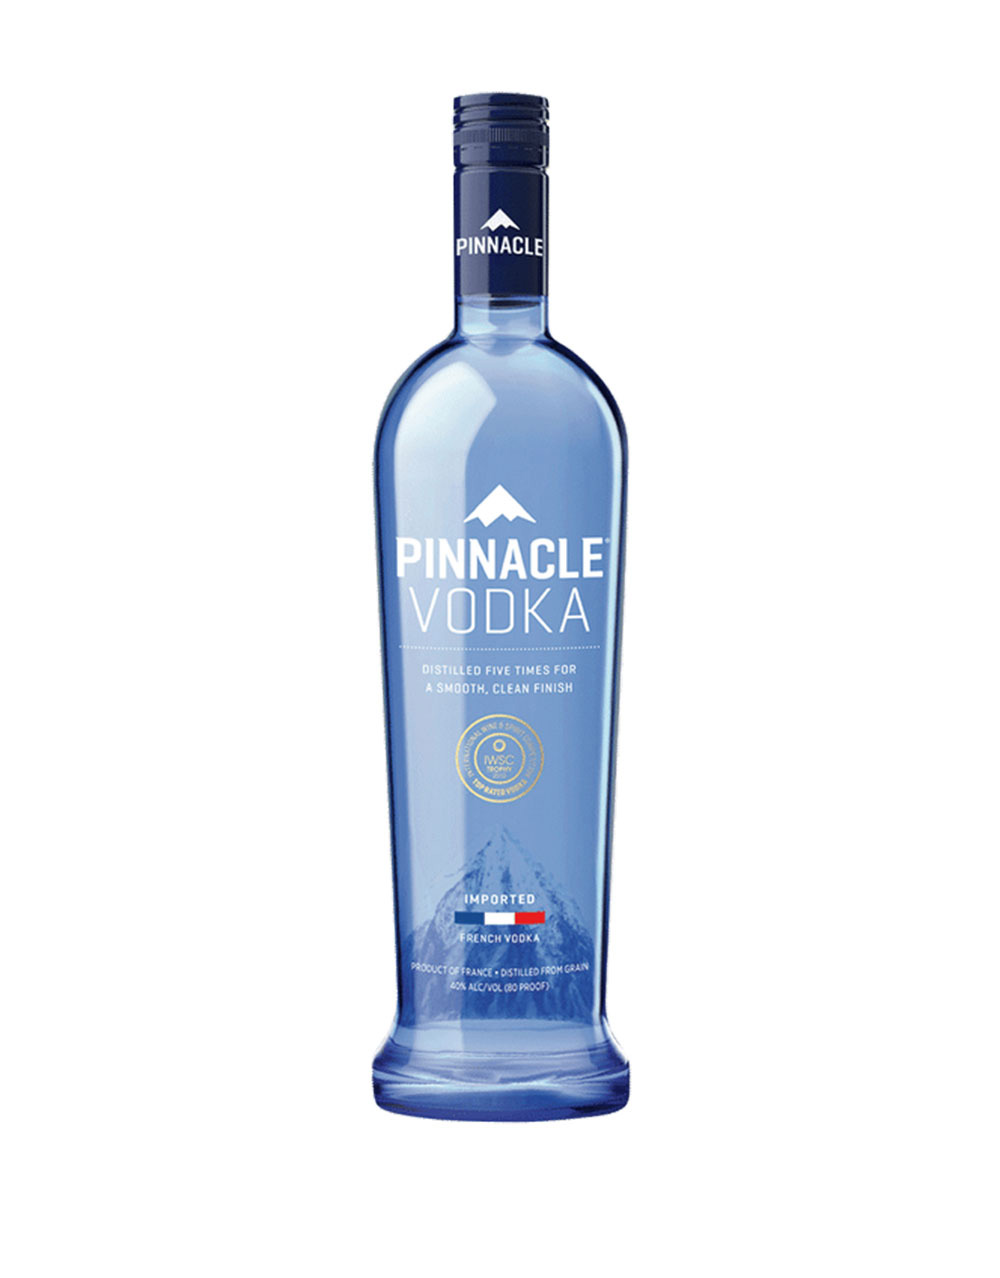 Snow Leopard Vodka